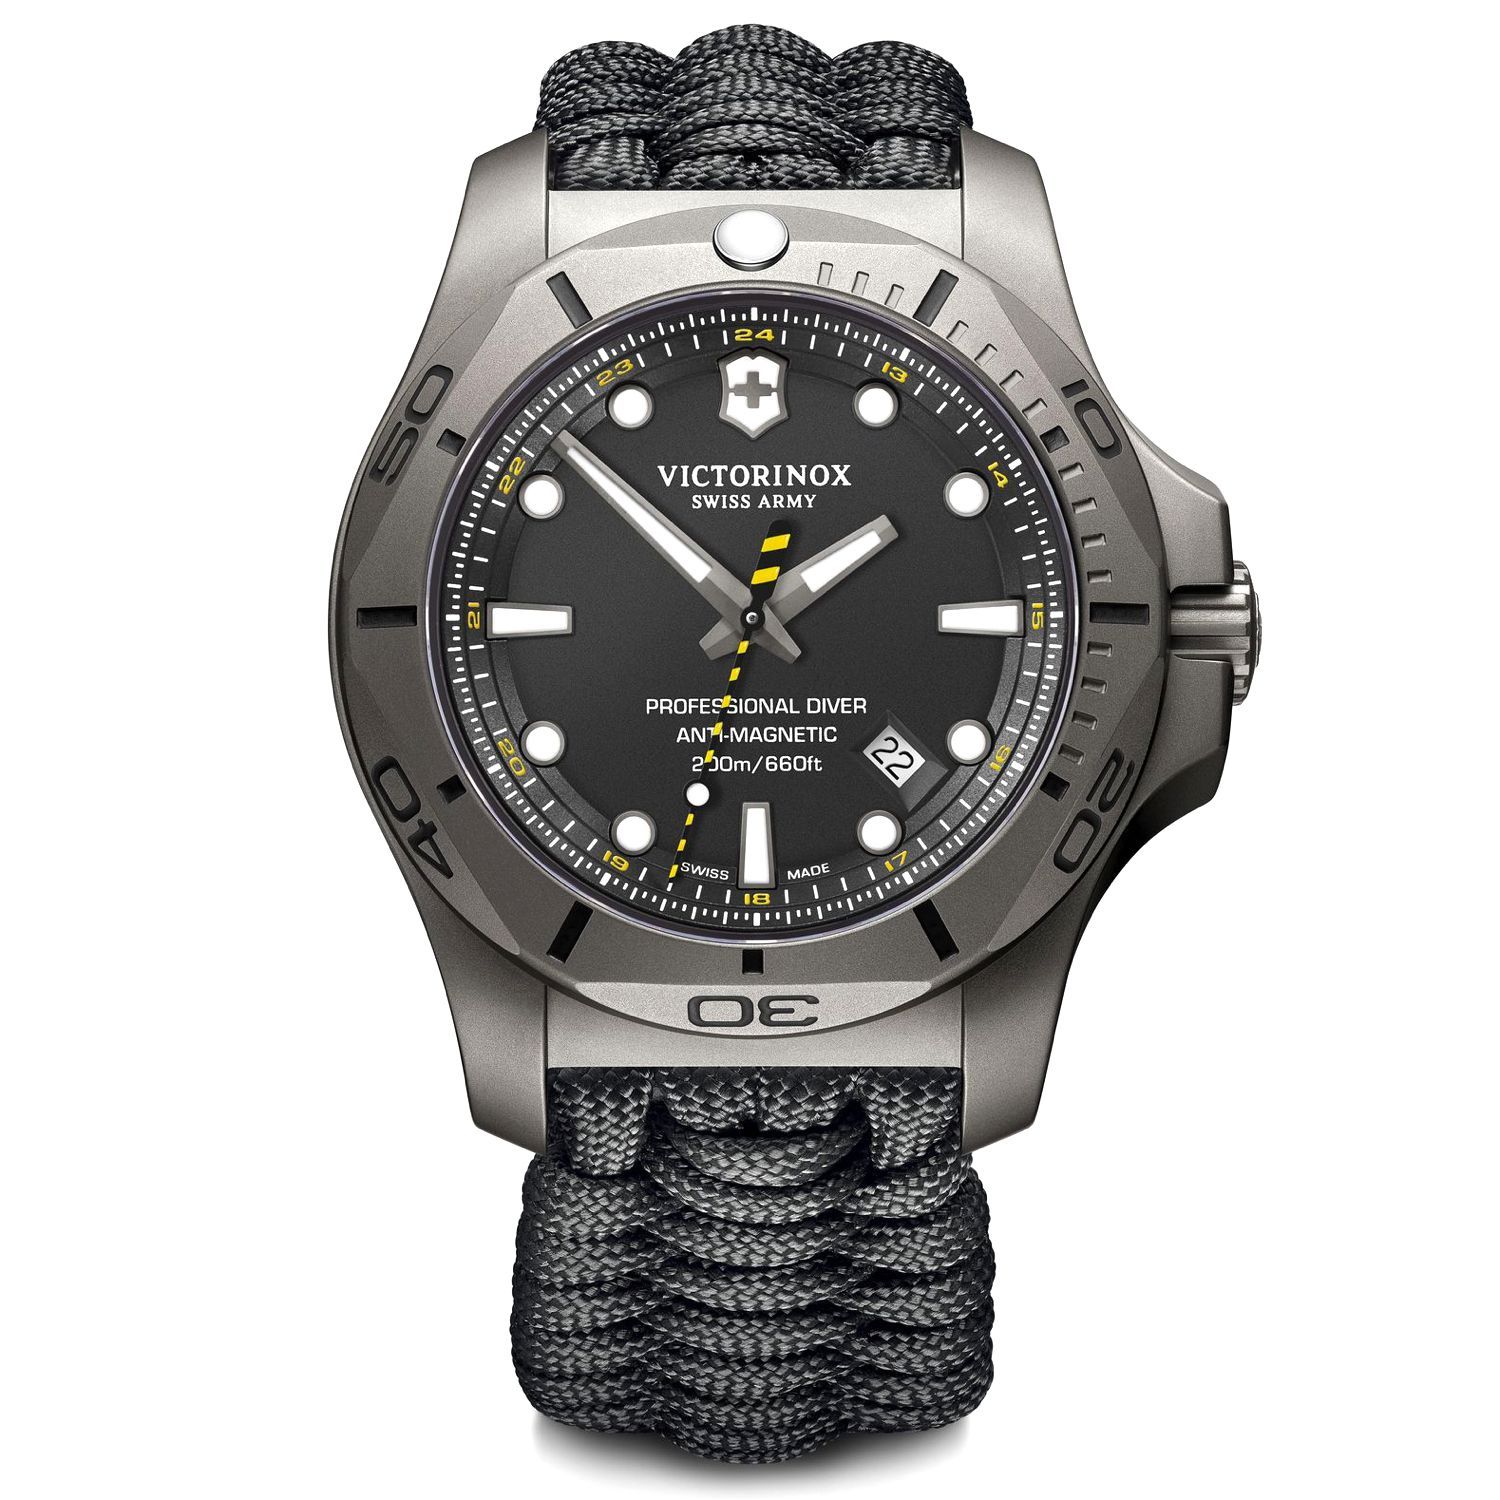 Victorinox Swiss Army I.N.O.X. Professional Titanium Diver Watch